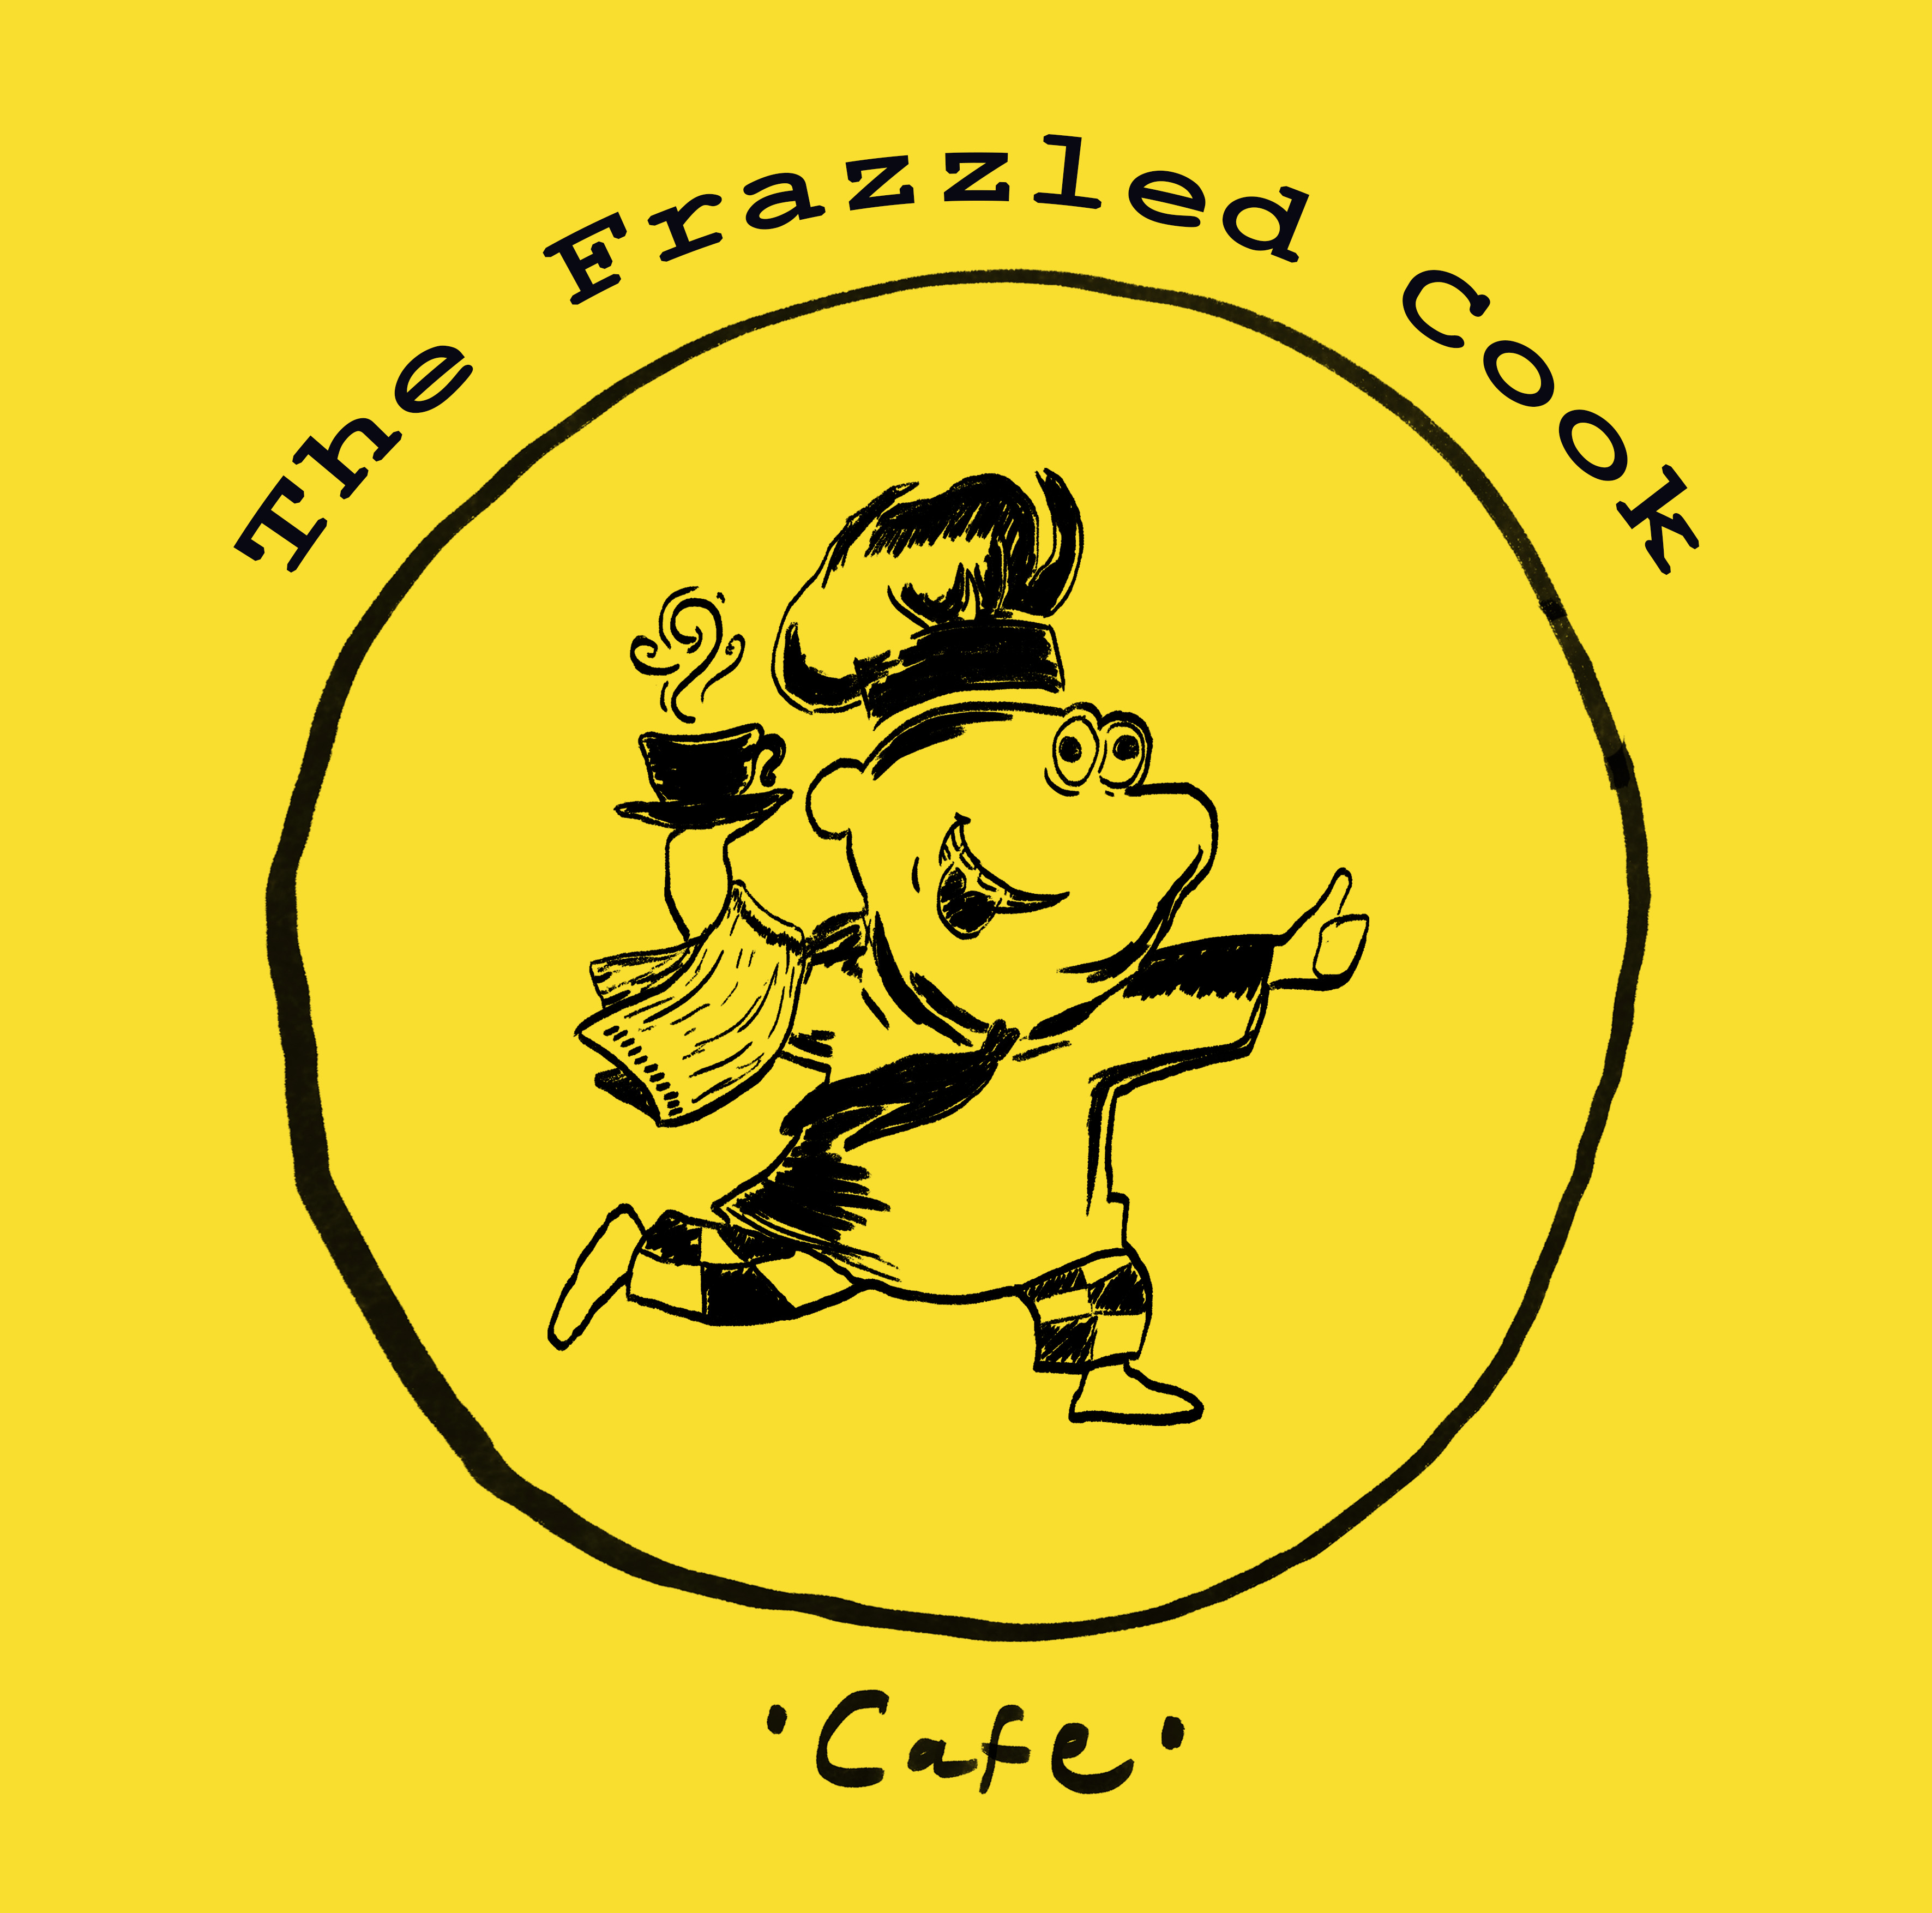 Frazzled Cook Logo